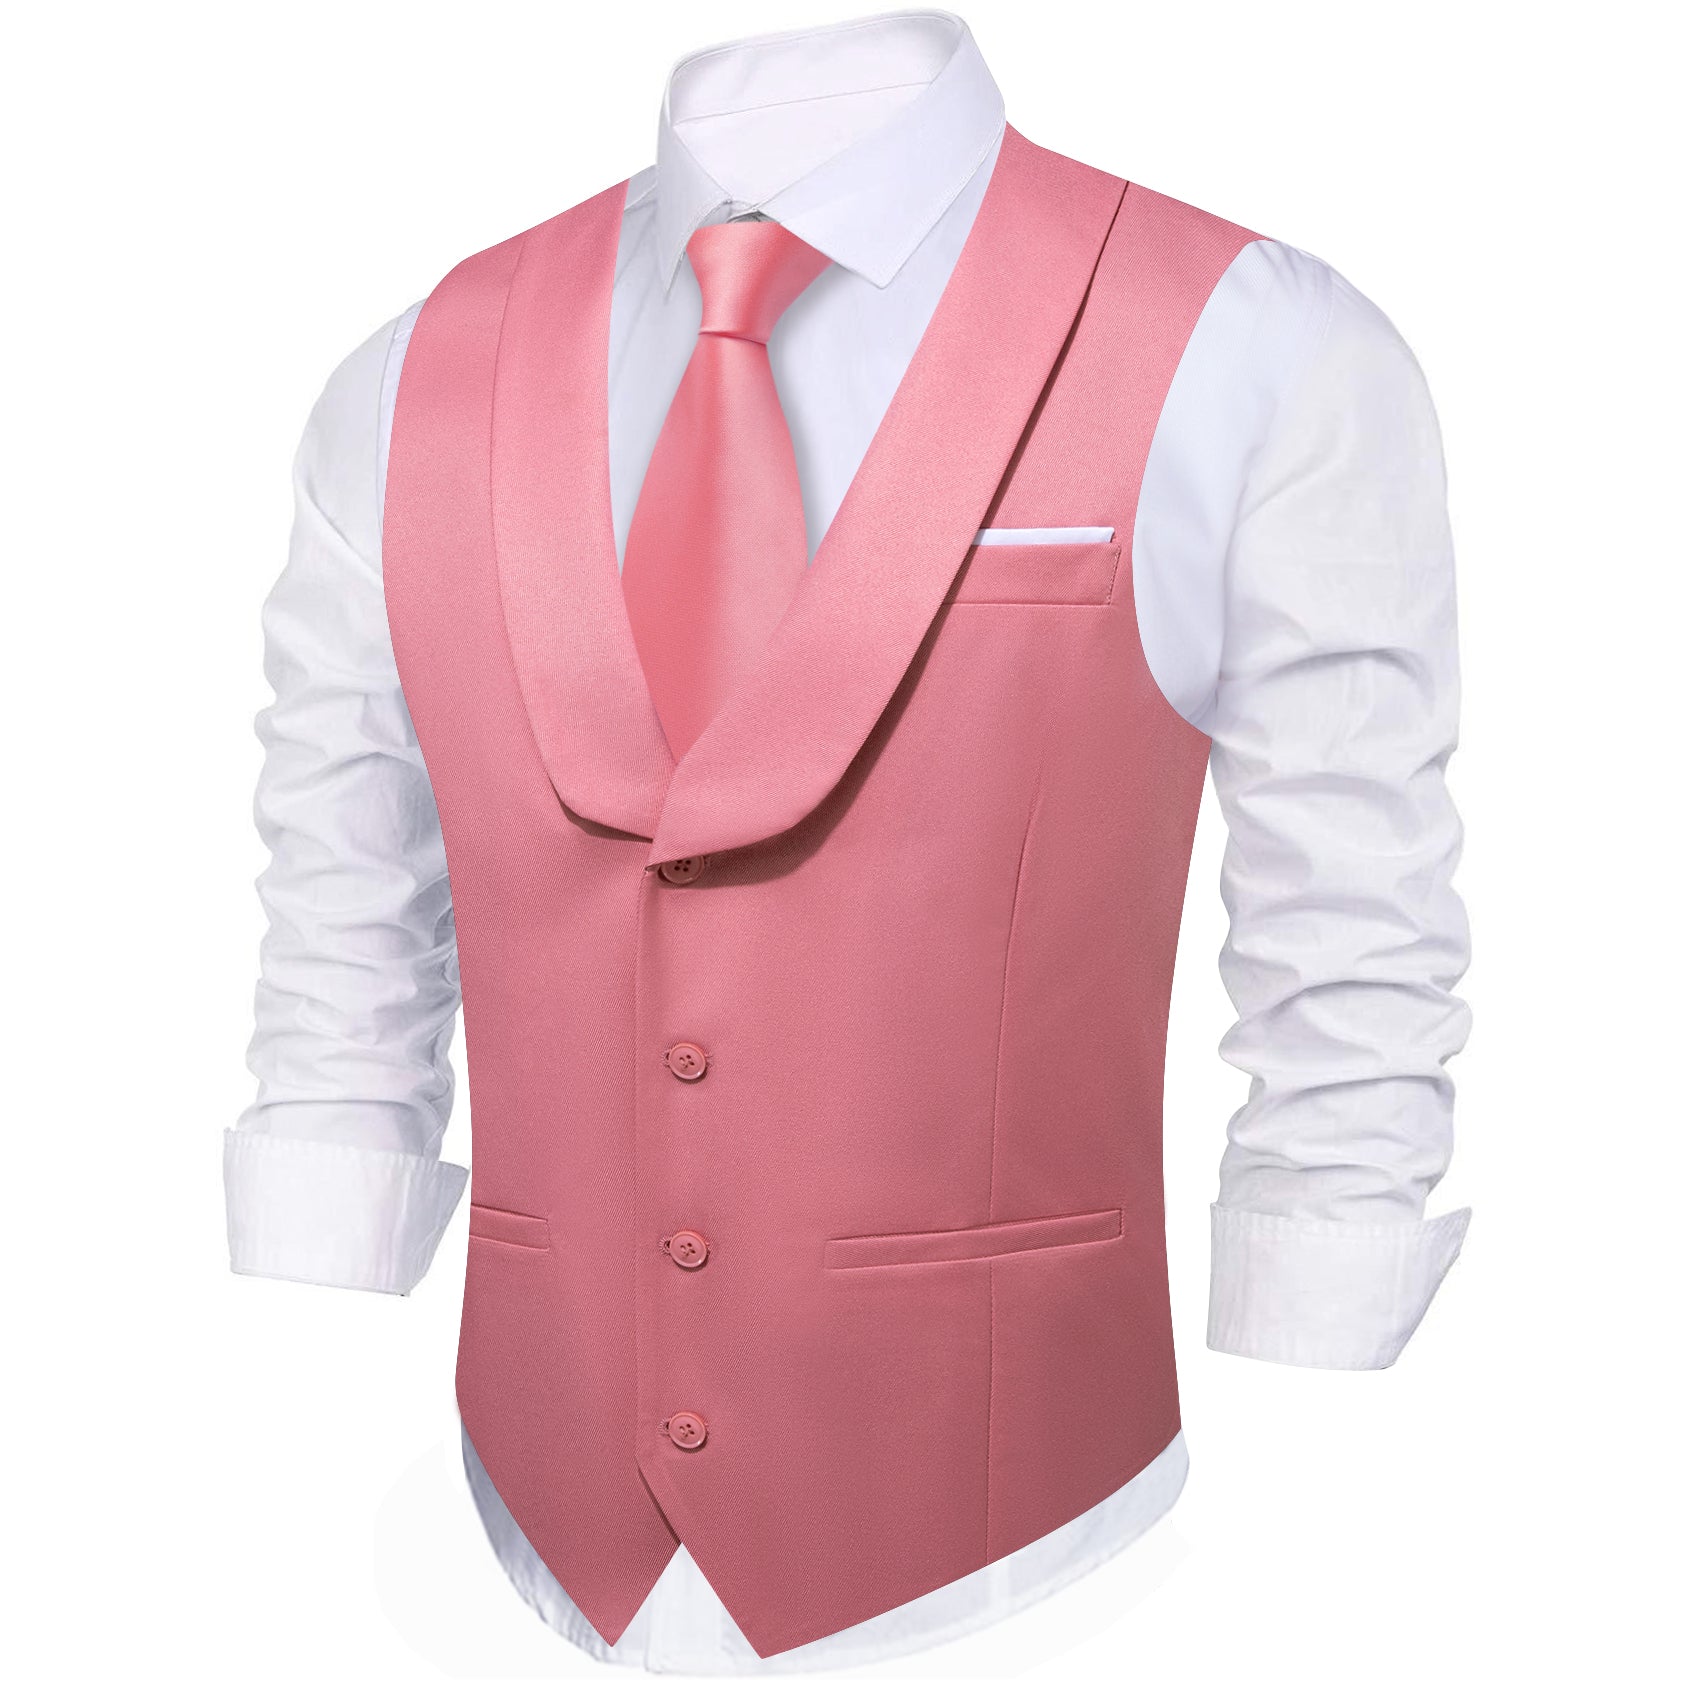 Barry.wang Novetly Pink Solid Vest Waistcoat Set